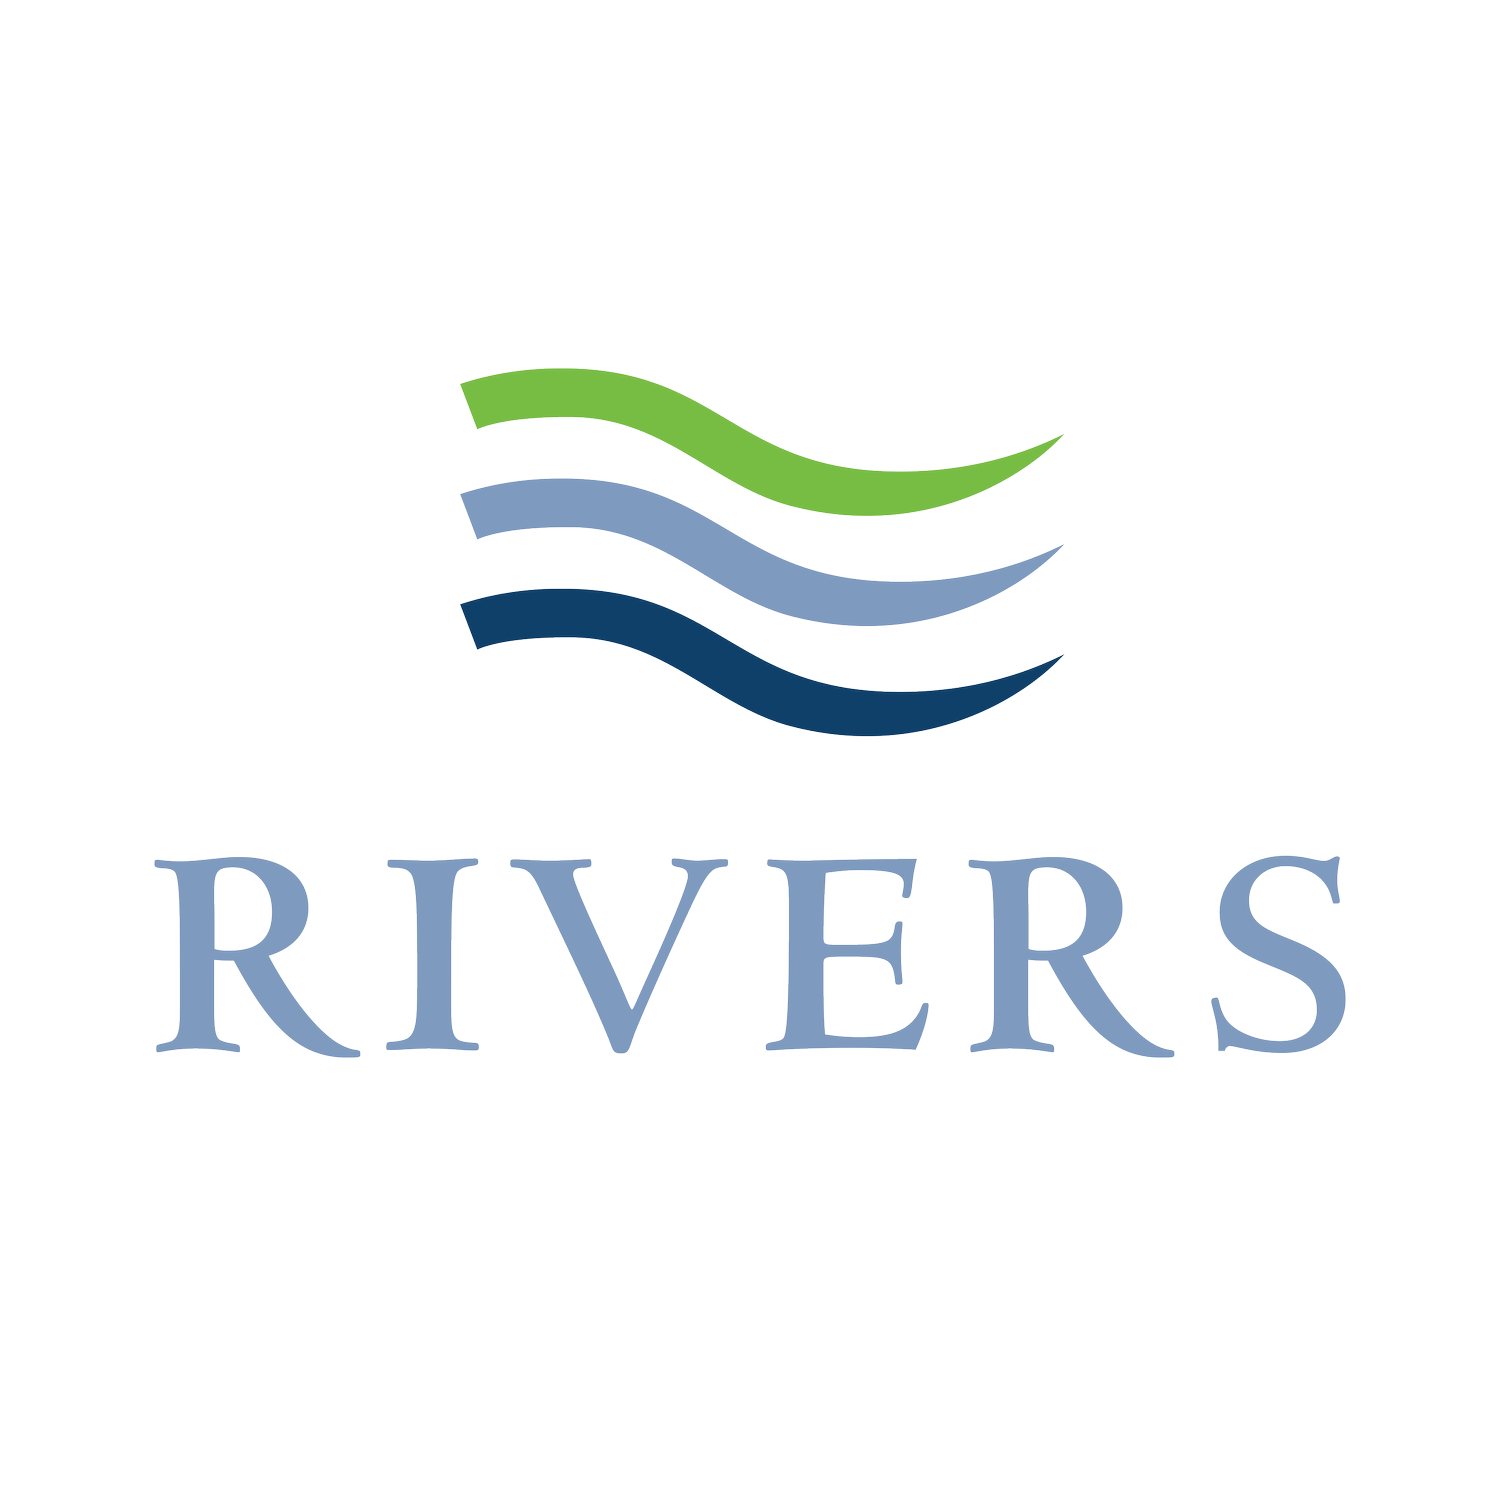 Image result for rivers logo